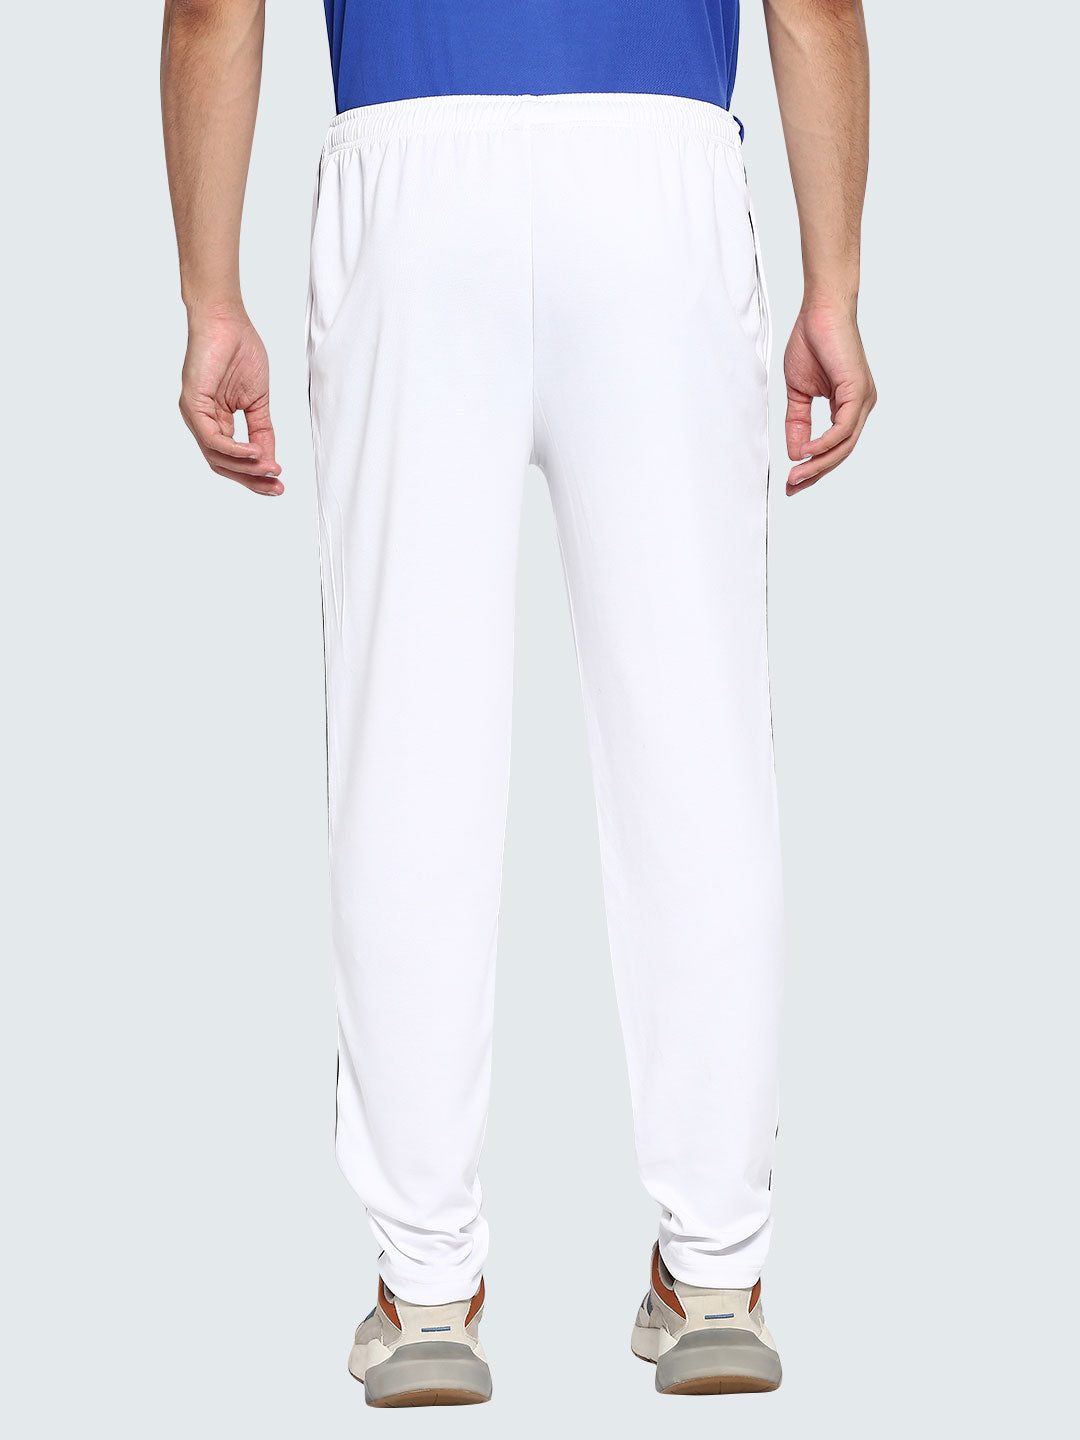 Buy Men White CRICKET BASIC P Track Pants online | Looksgud.in